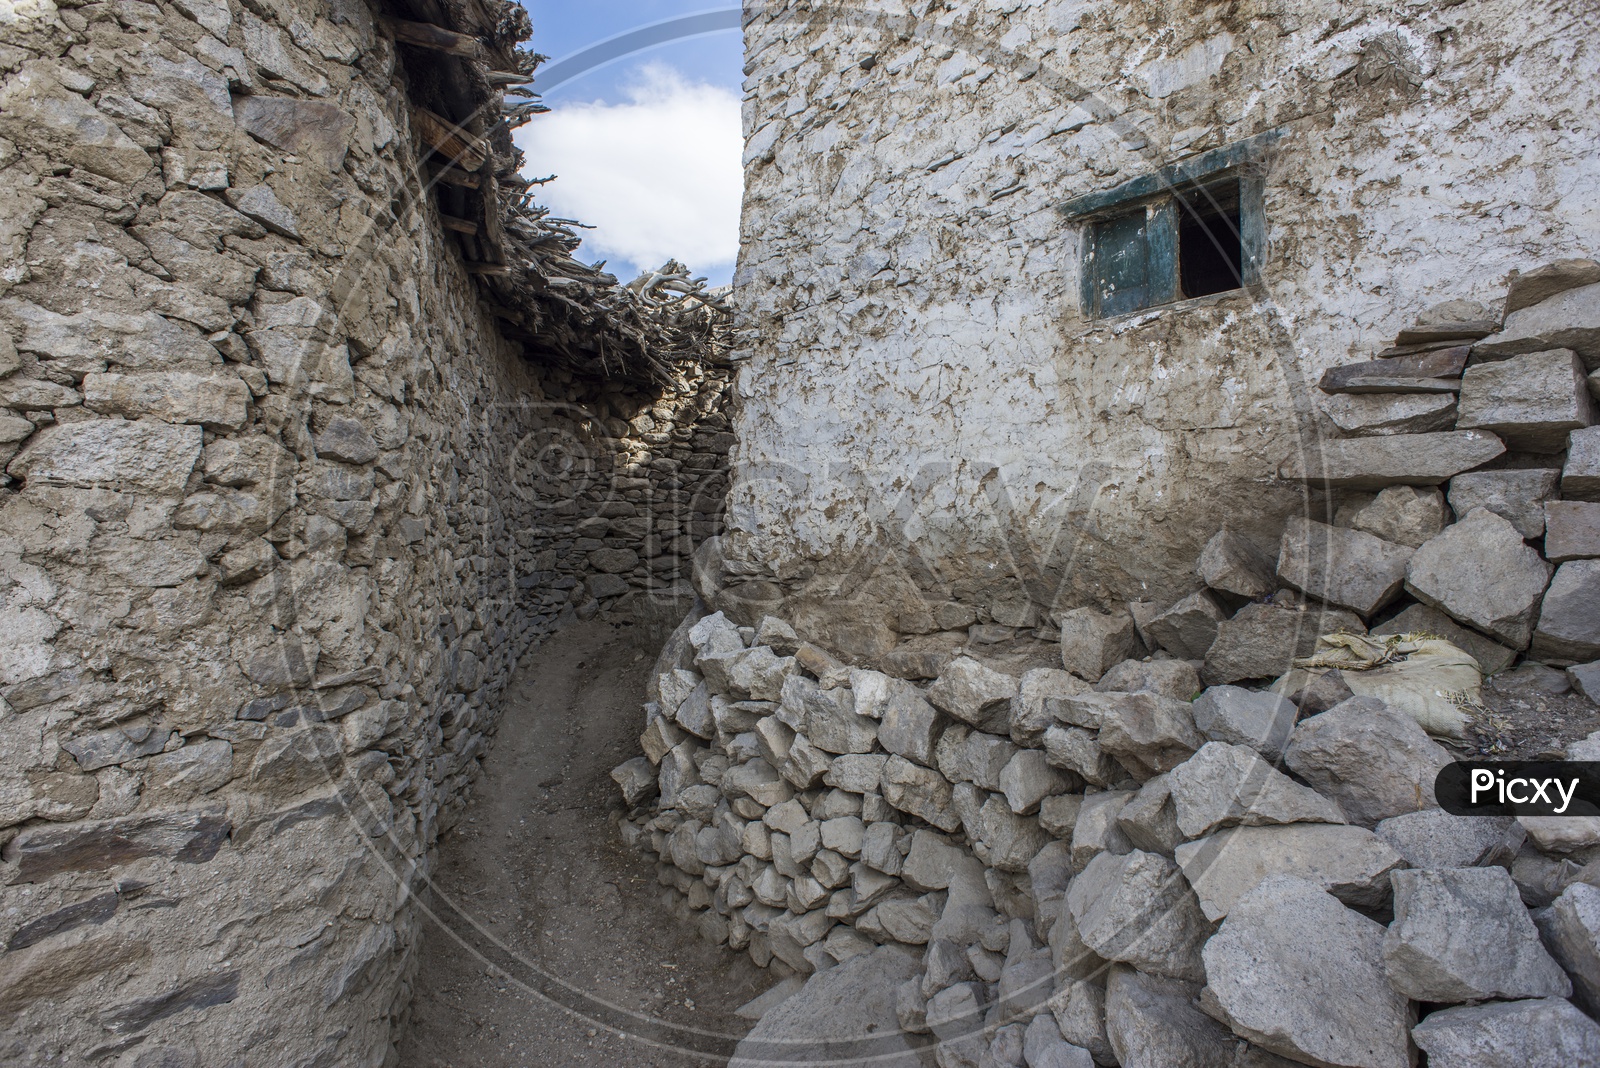 Stone Houses in Nako Village, Spiti valley